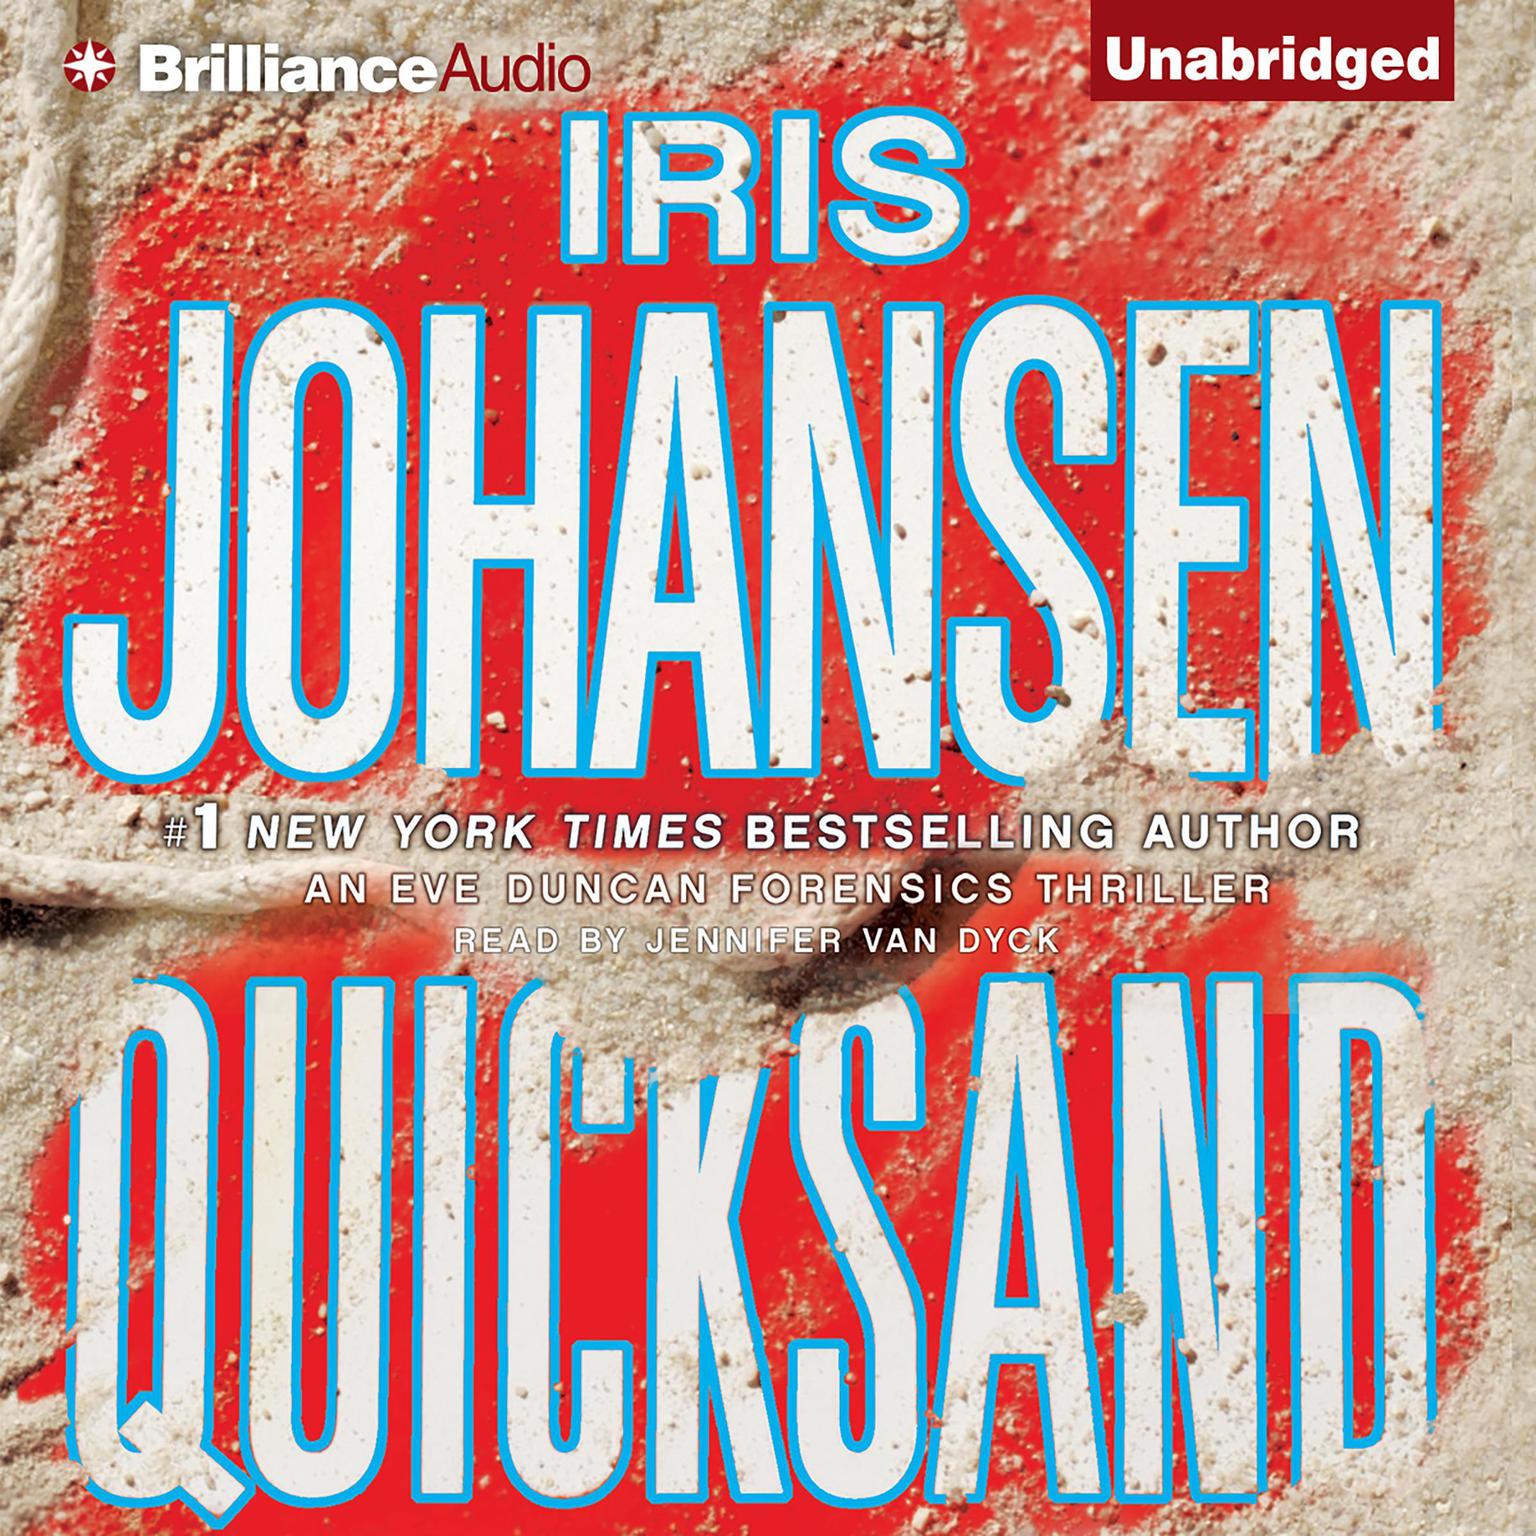 Quicksand Audiobook, by Iris Johansen